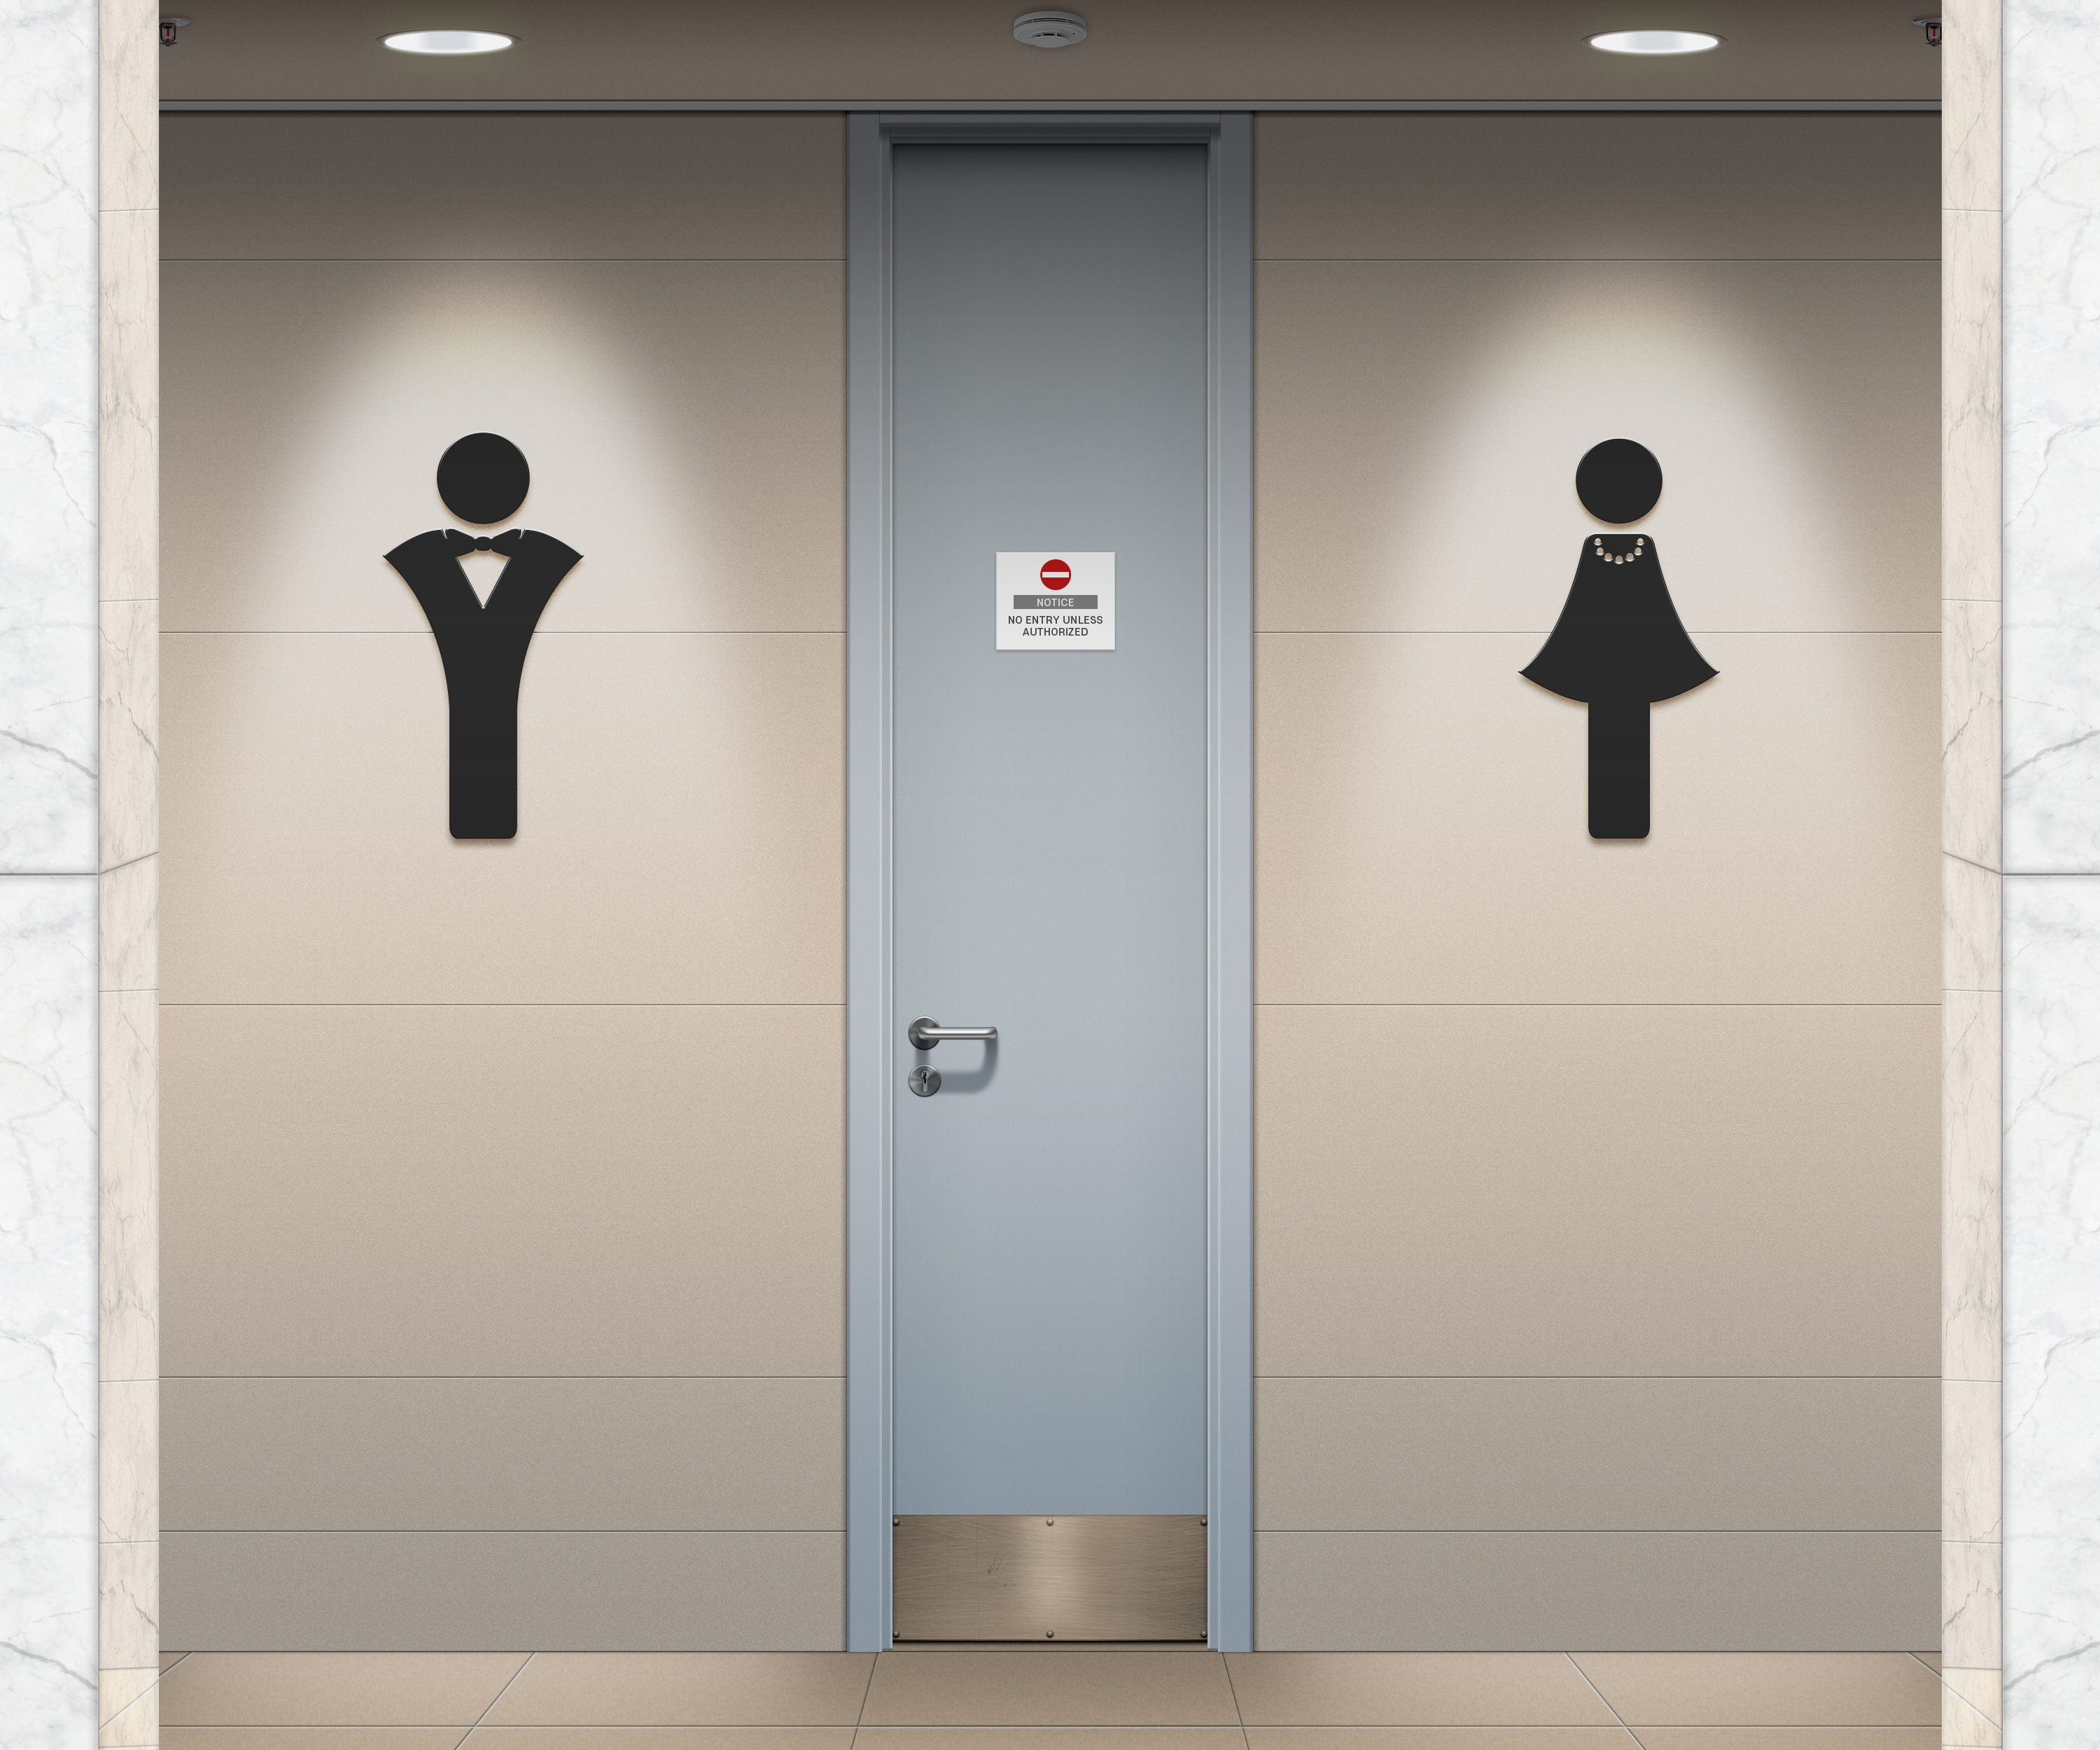 General 3000x2500 toilets public restroom signs digital art